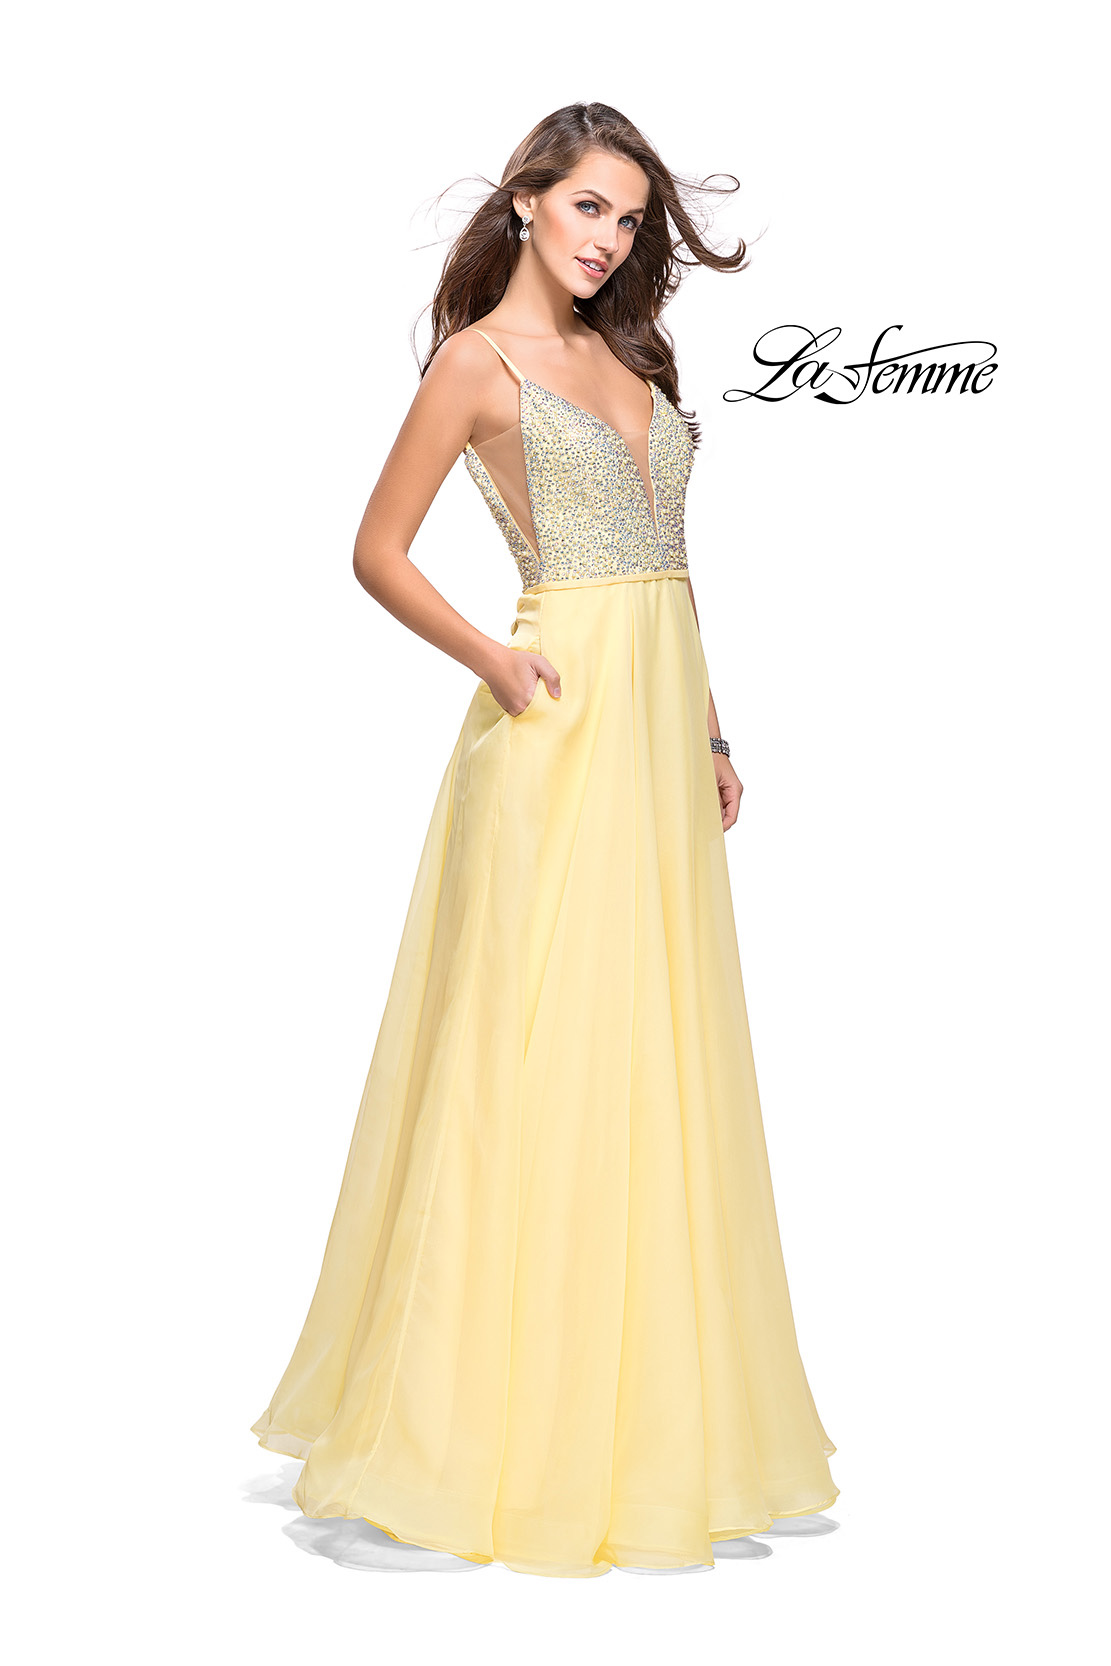 Chiffon Yellow Prom Dress with Pockets by La Femme